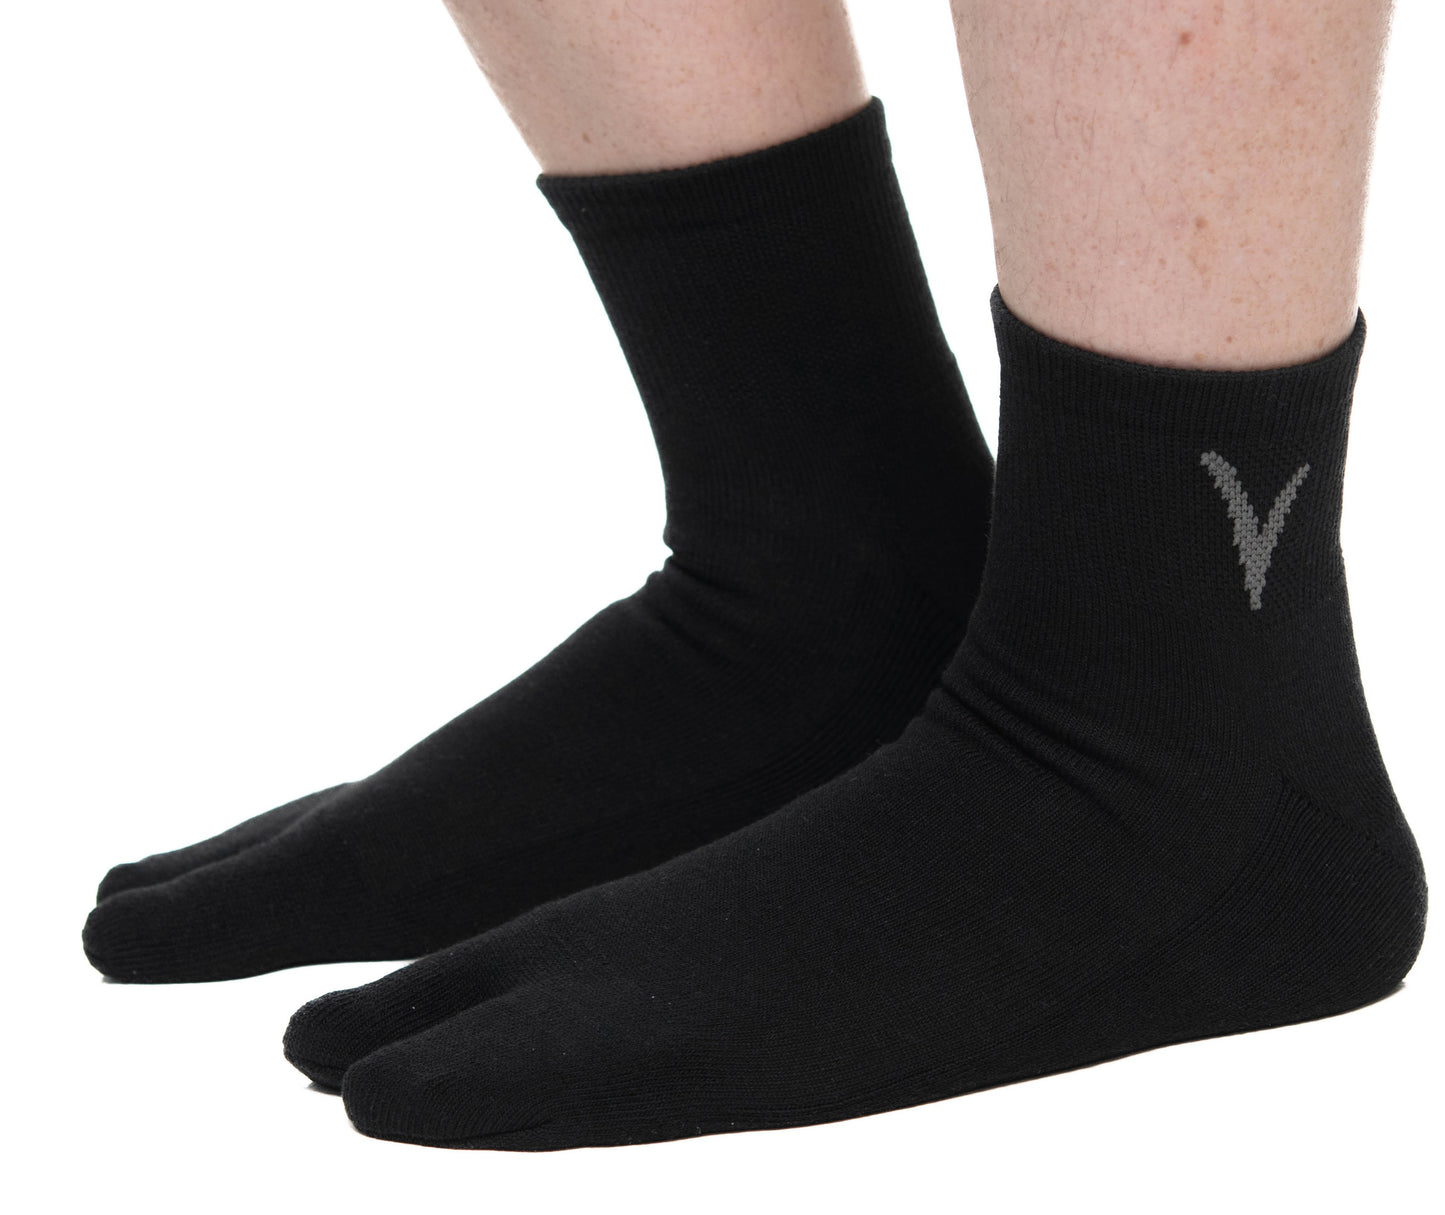 Comfy and Stylish Toe Socks